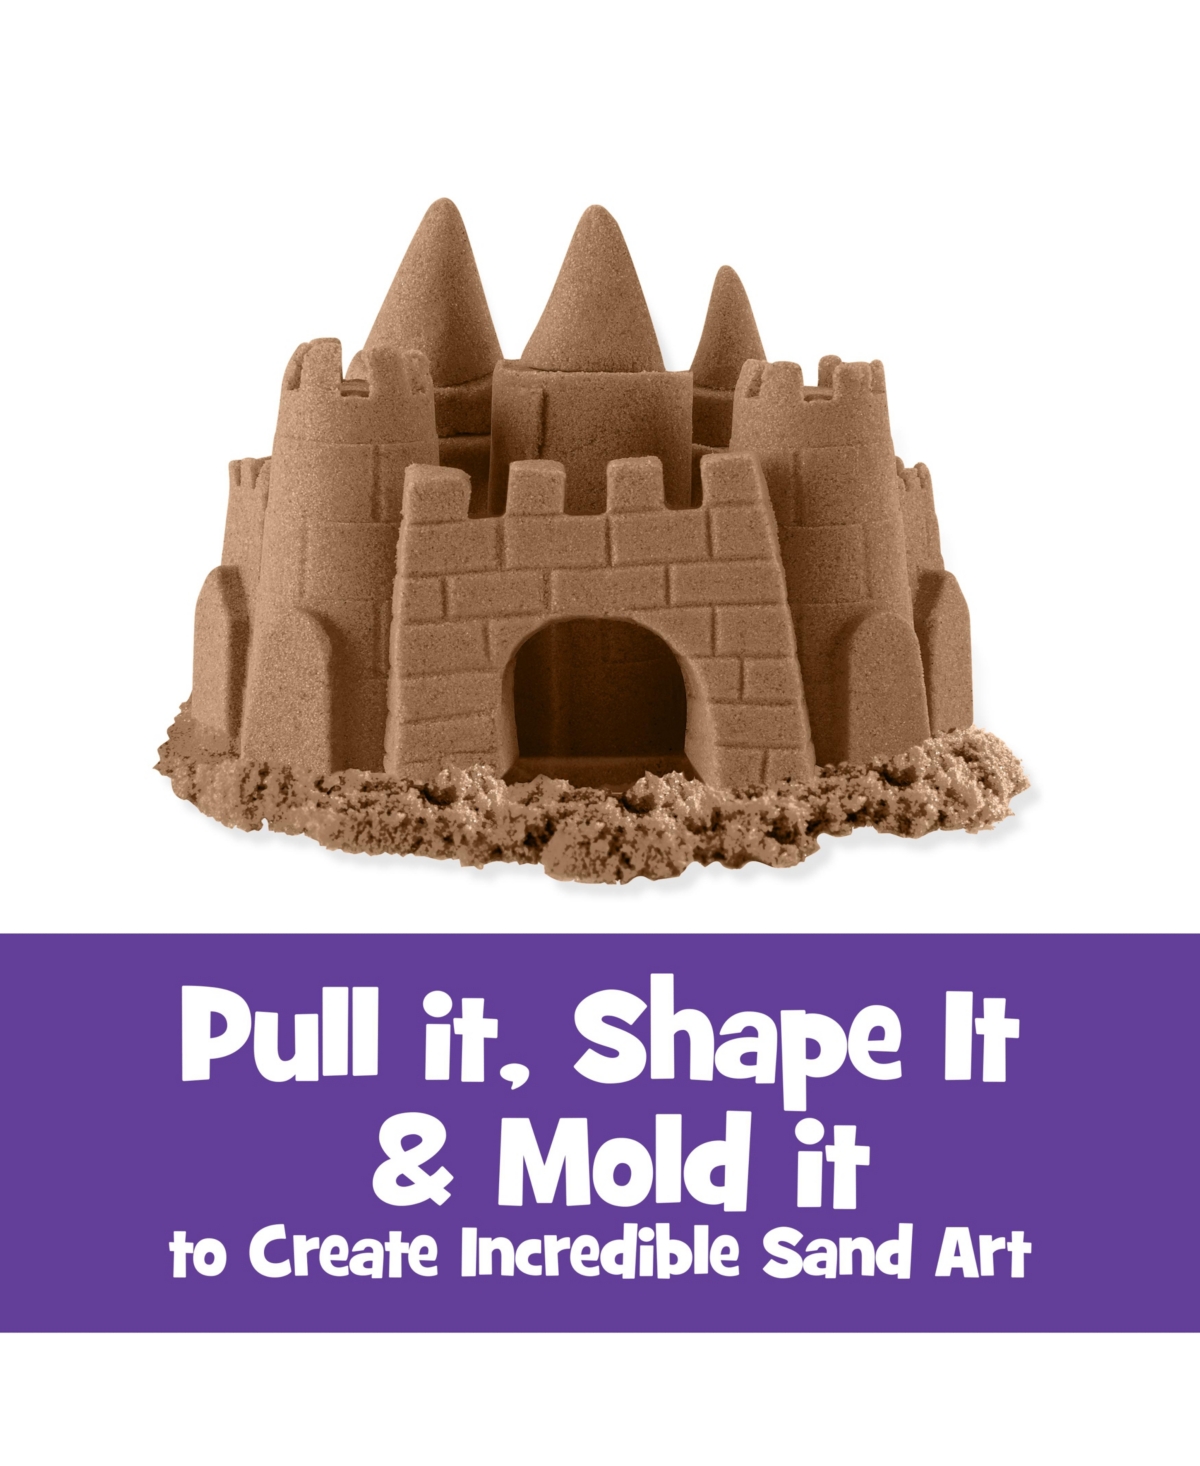 Kinetic Sand CLOSEOUT! Folding Sand Box - Macy's